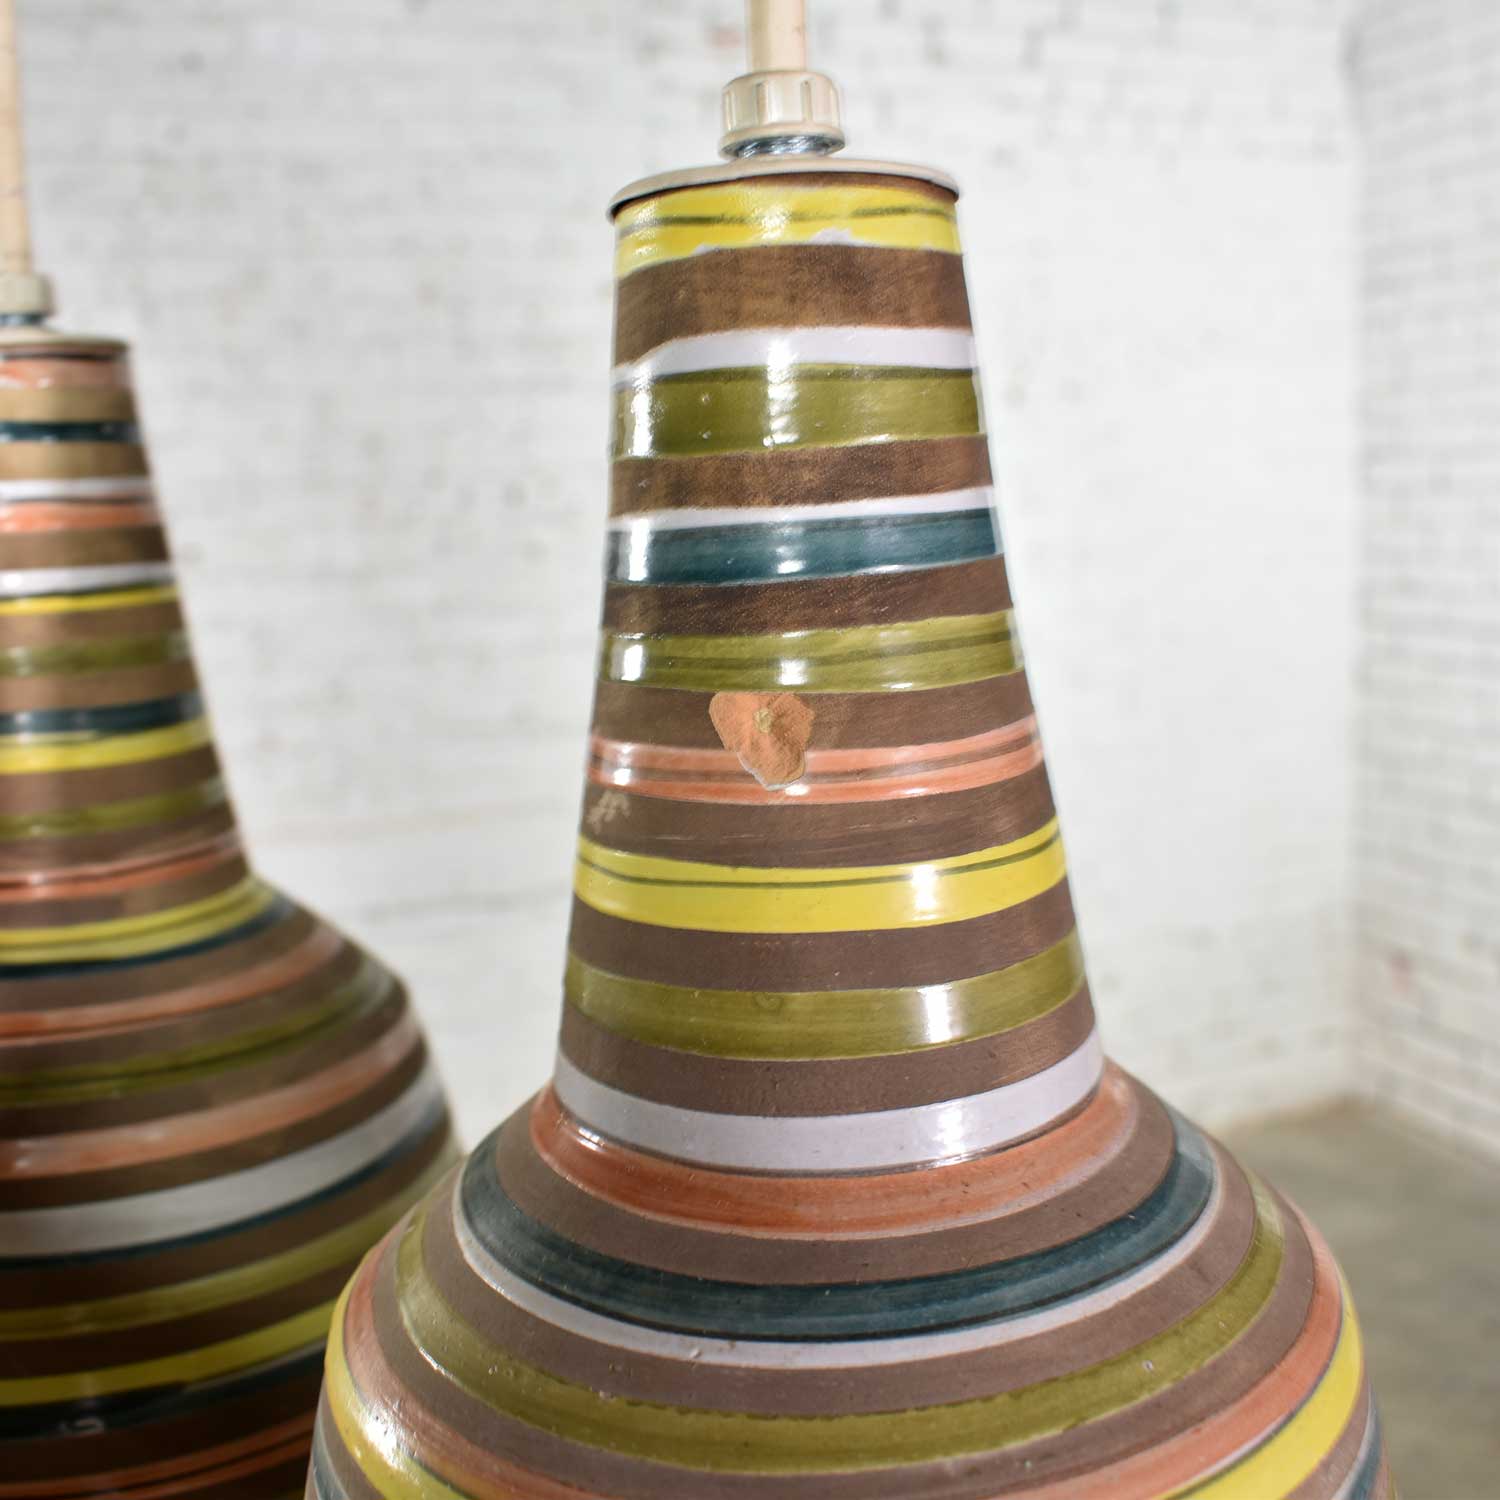 MCM Italian Ceramic Triple Pendant Ceiling Light Attributed to Alvino Bagni for Raymor